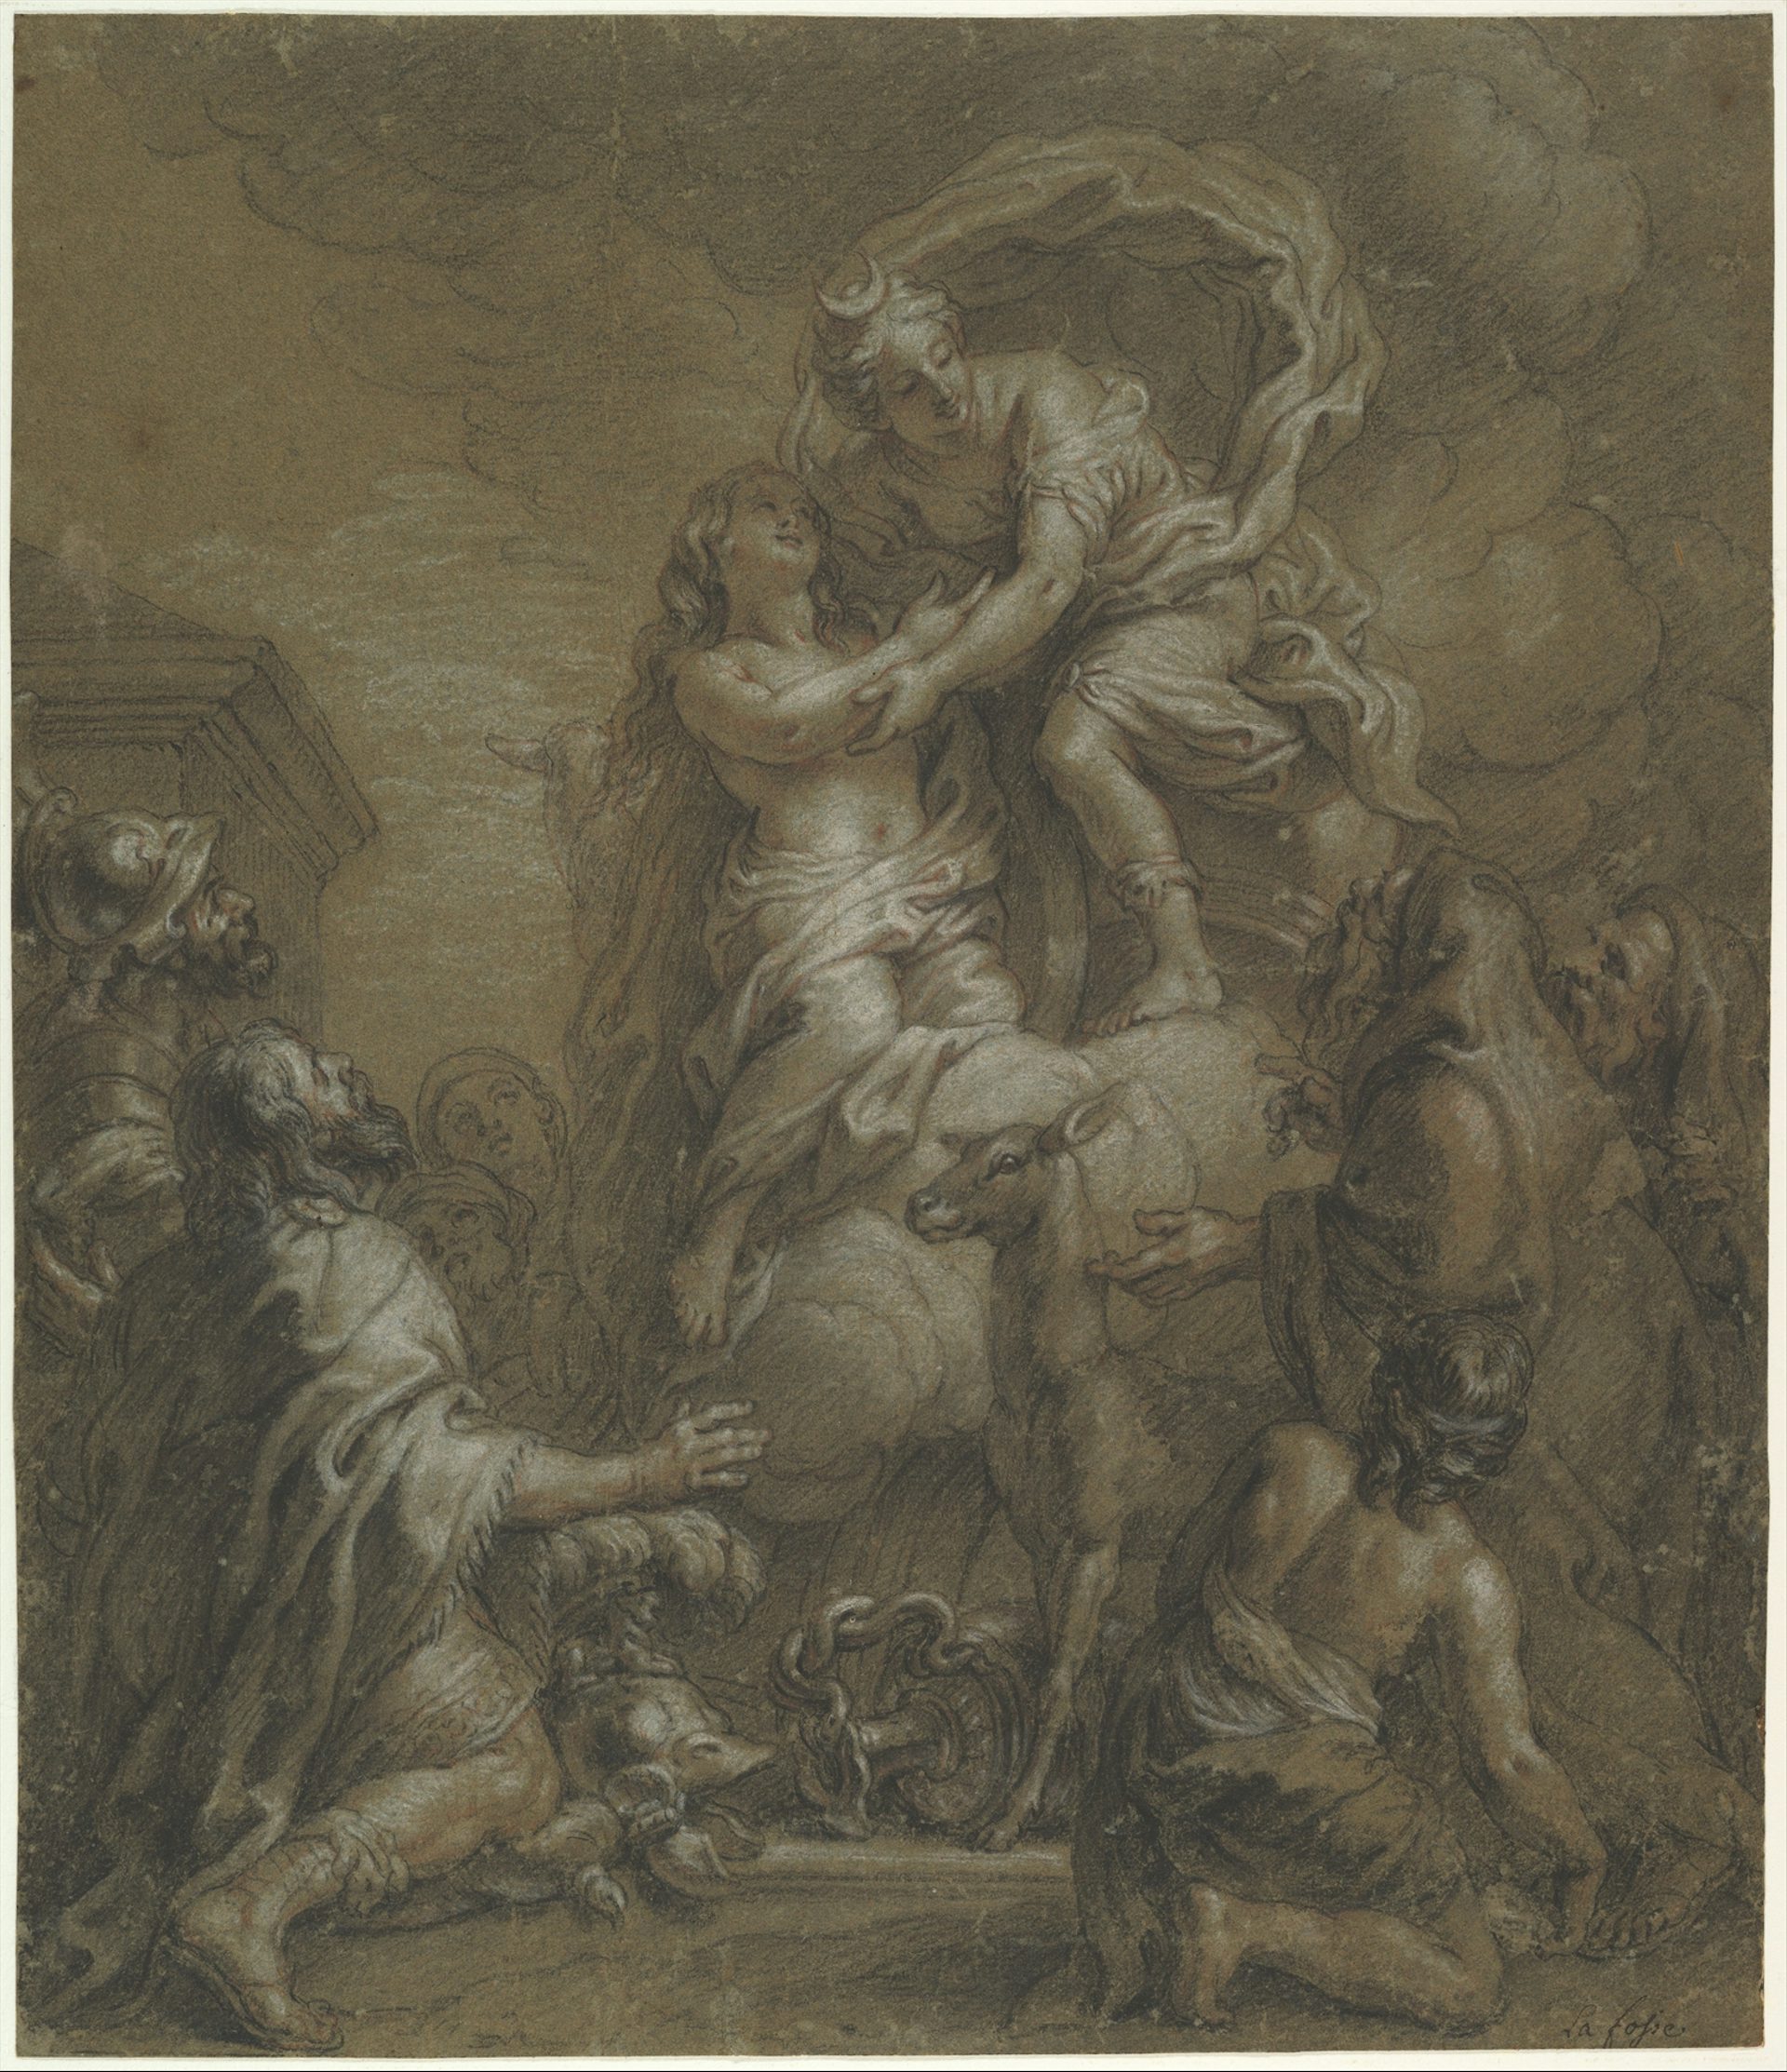 Sacrifice of Iphigenia by Charles de la Fosse